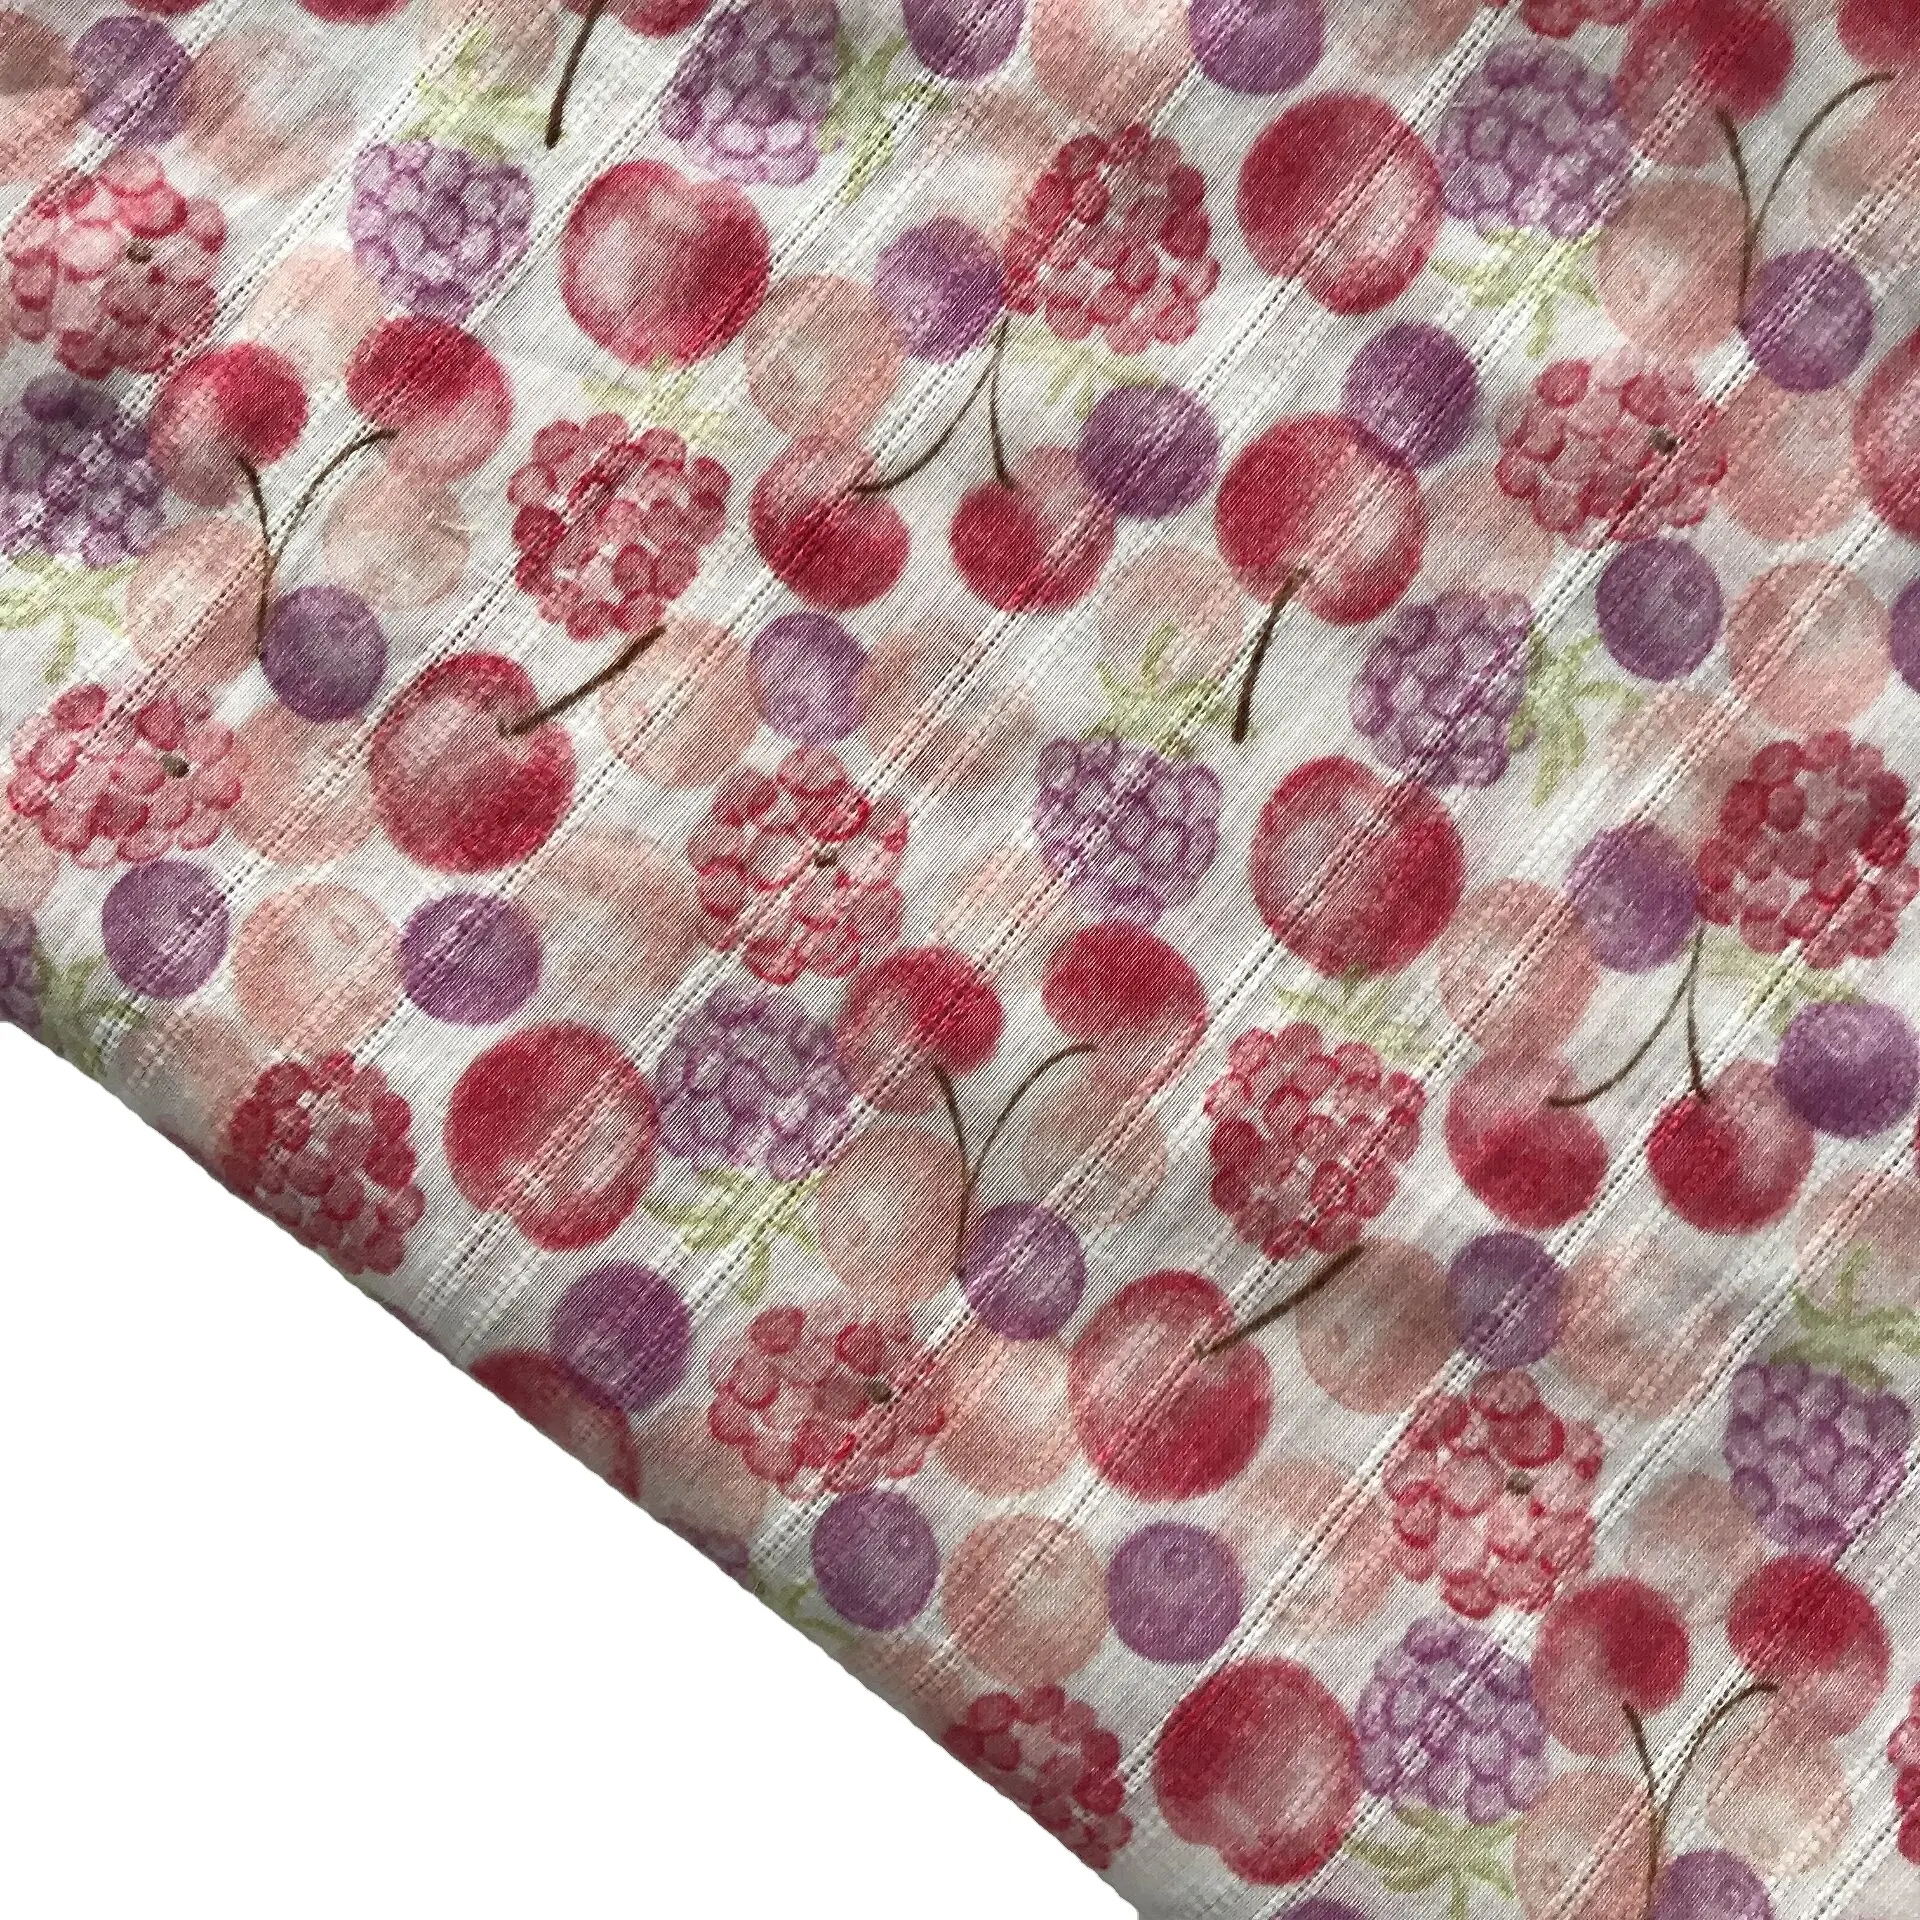 100% cotton printed fabric fresh berry bottom dyeing bottom children's dress fabric soft skin-friendly spring fabric